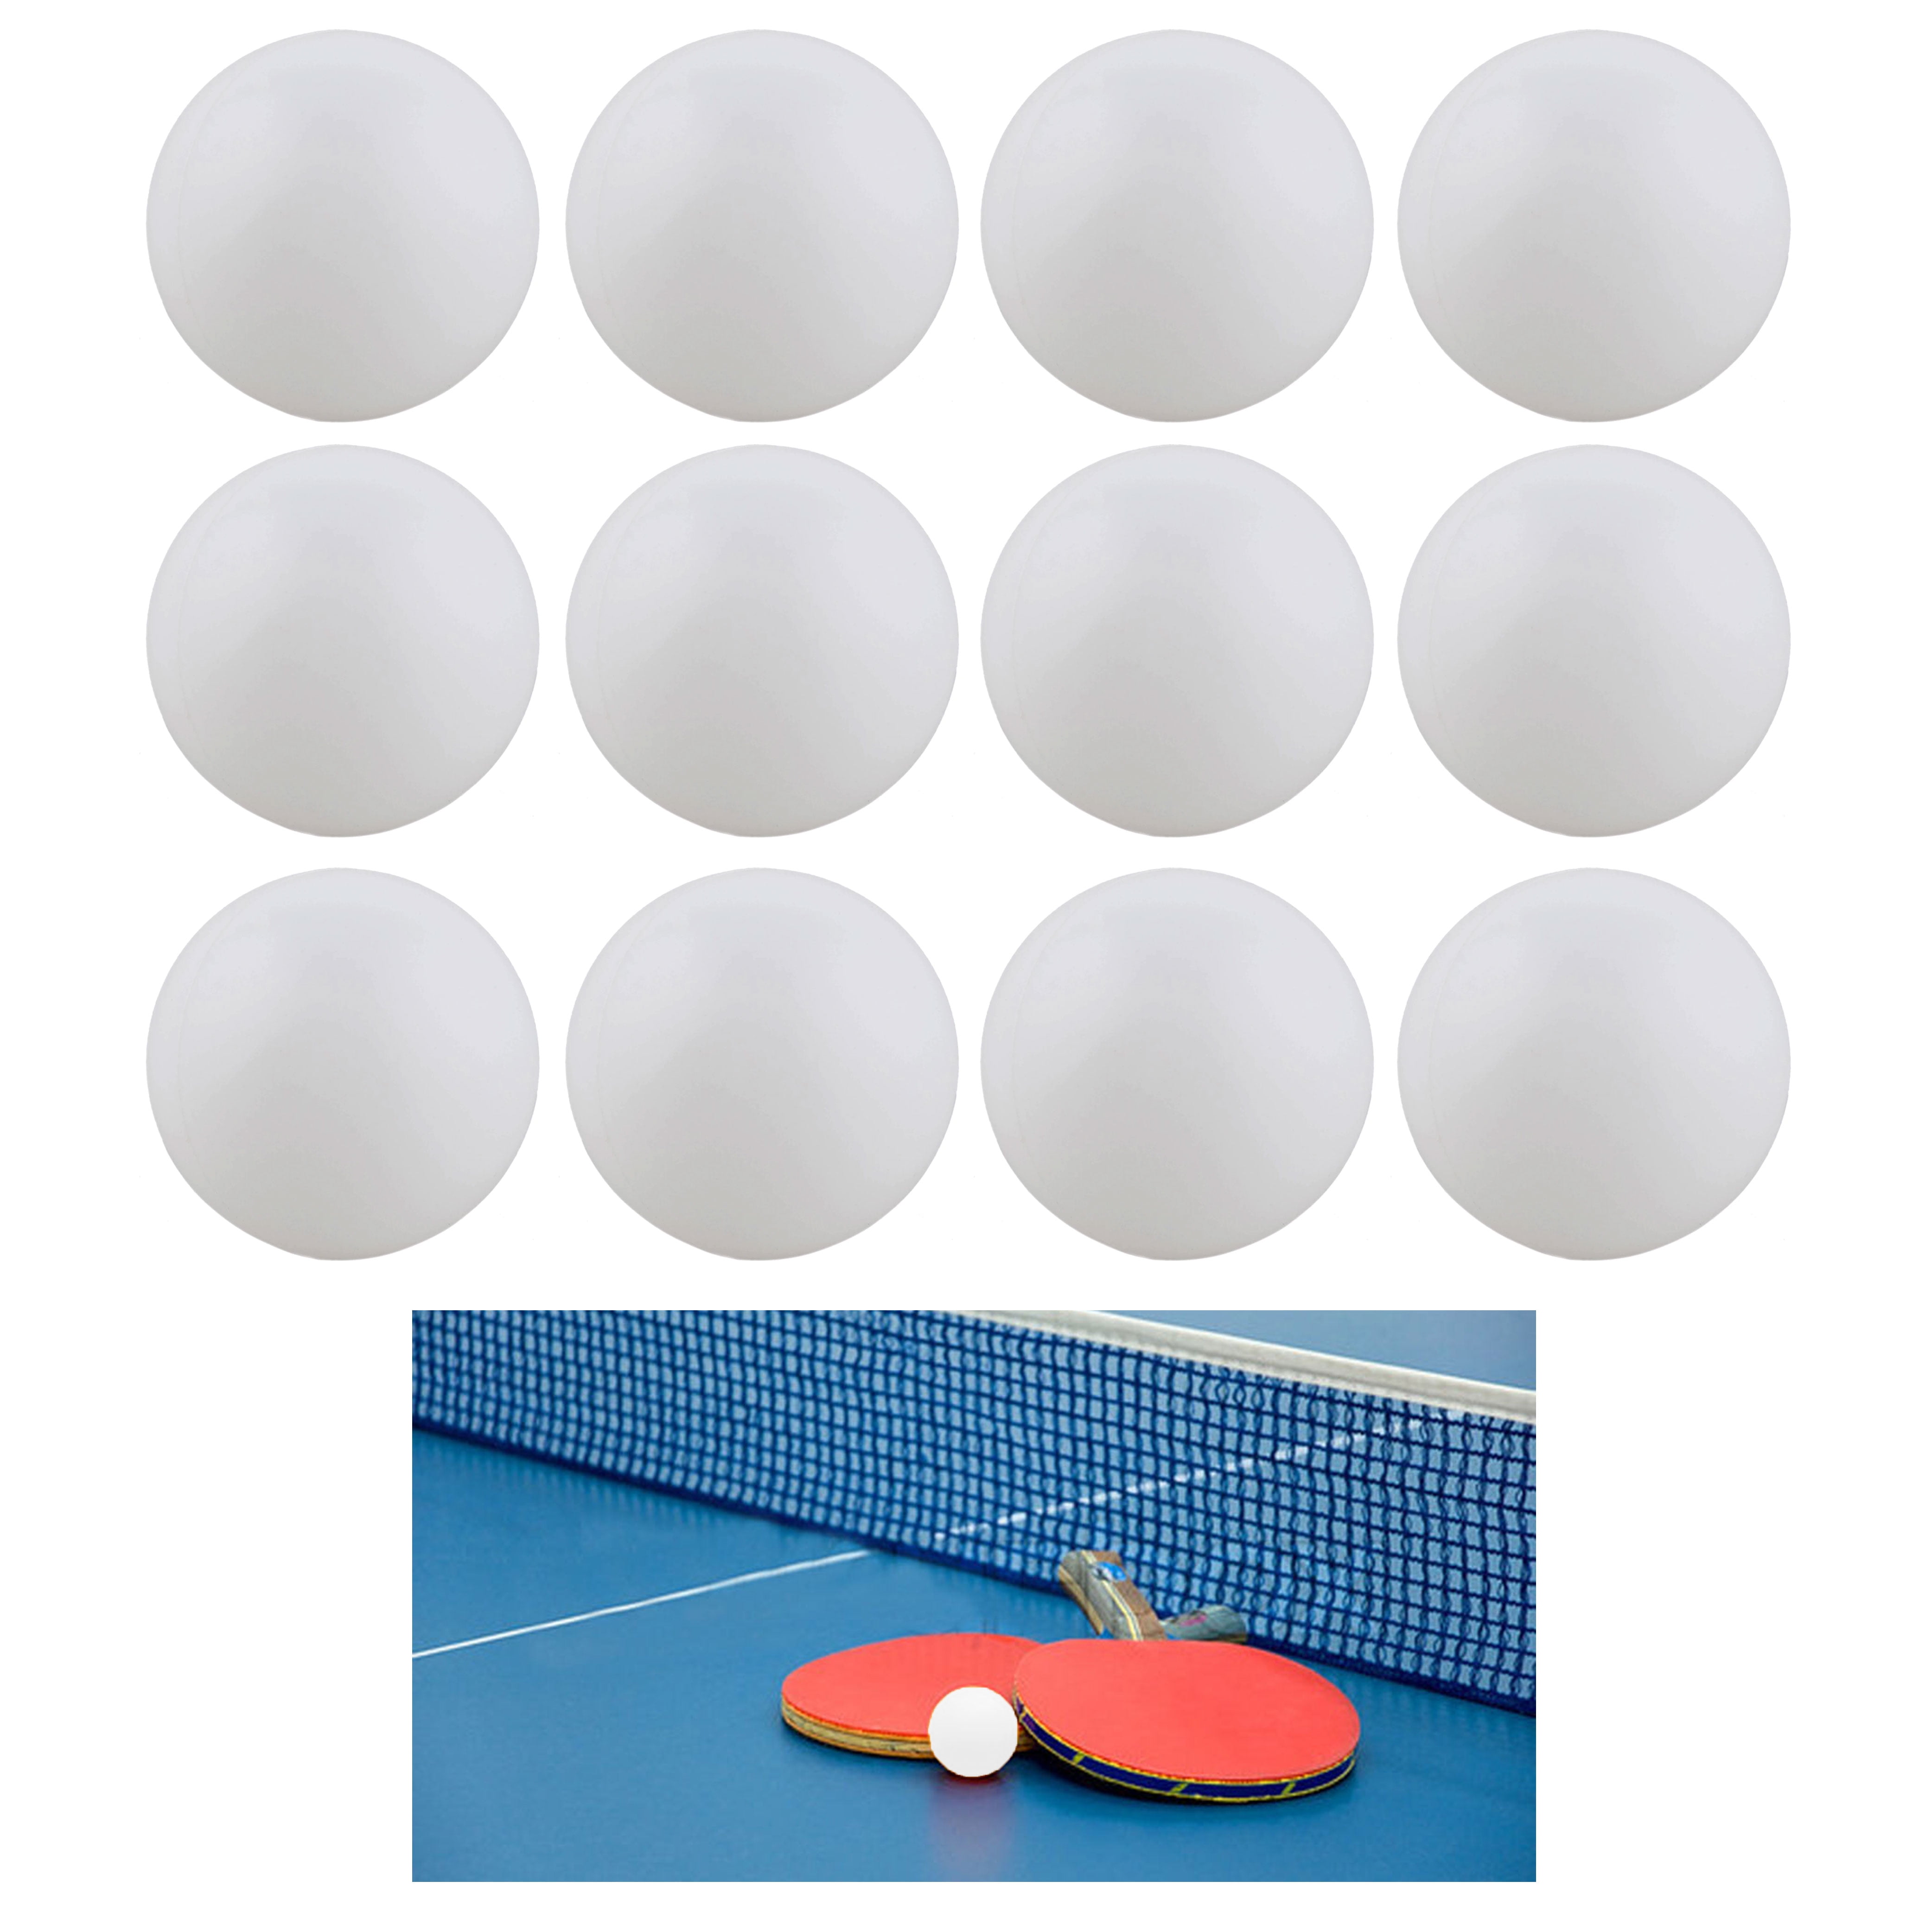  Table Tennis Balls Pack of 6 Beer Pong Balls 